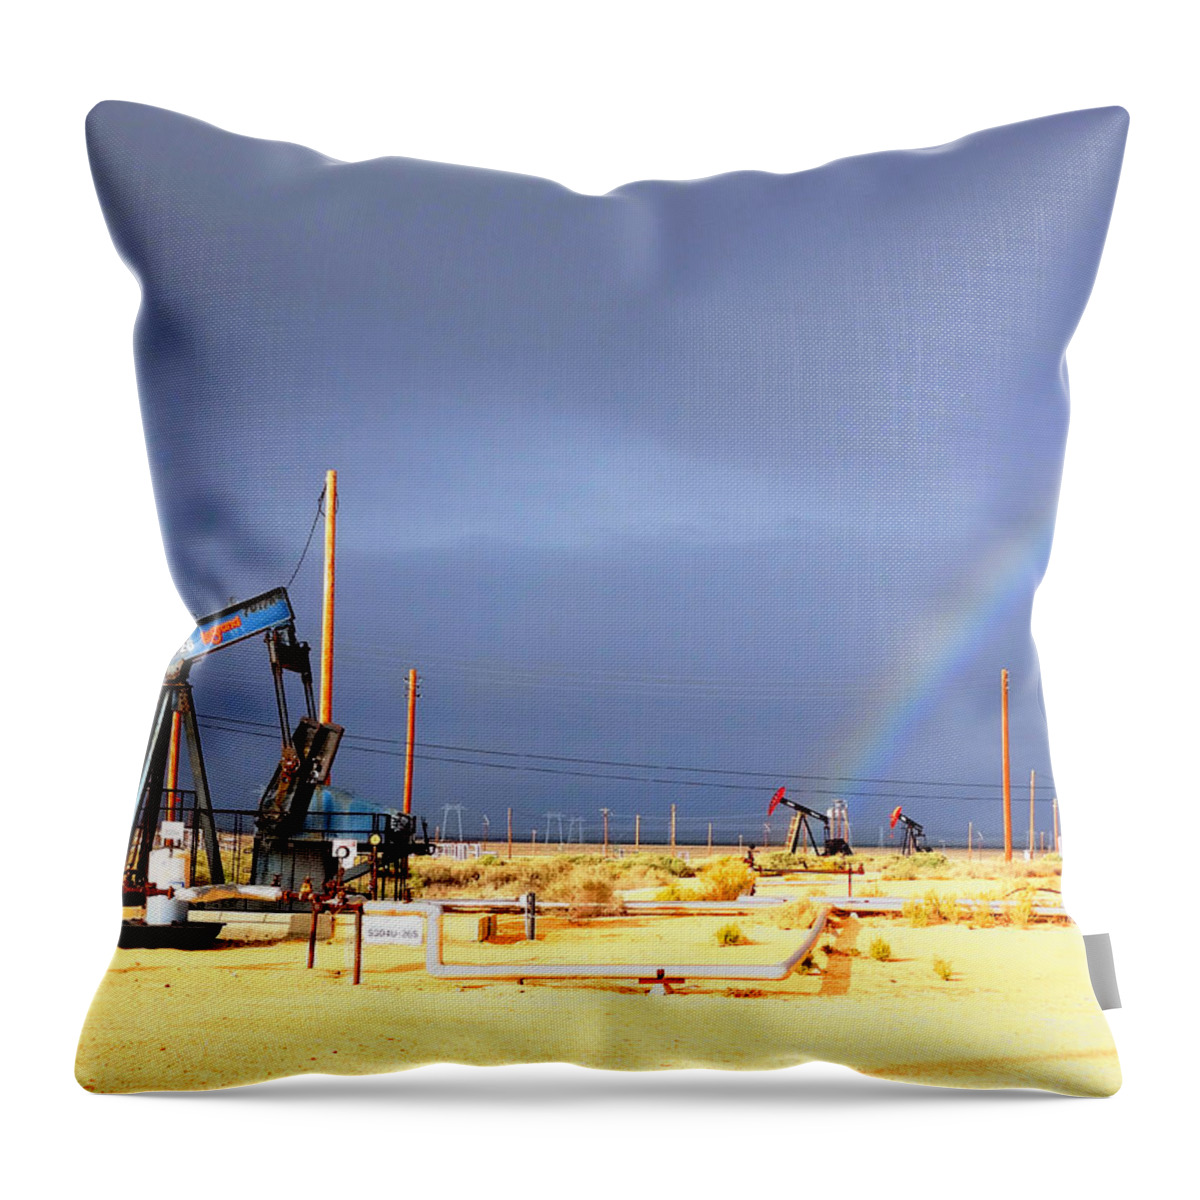 Cymric Field Throw Pillow featuring the photograph Cymric Field Rainbow by Lanita Williams